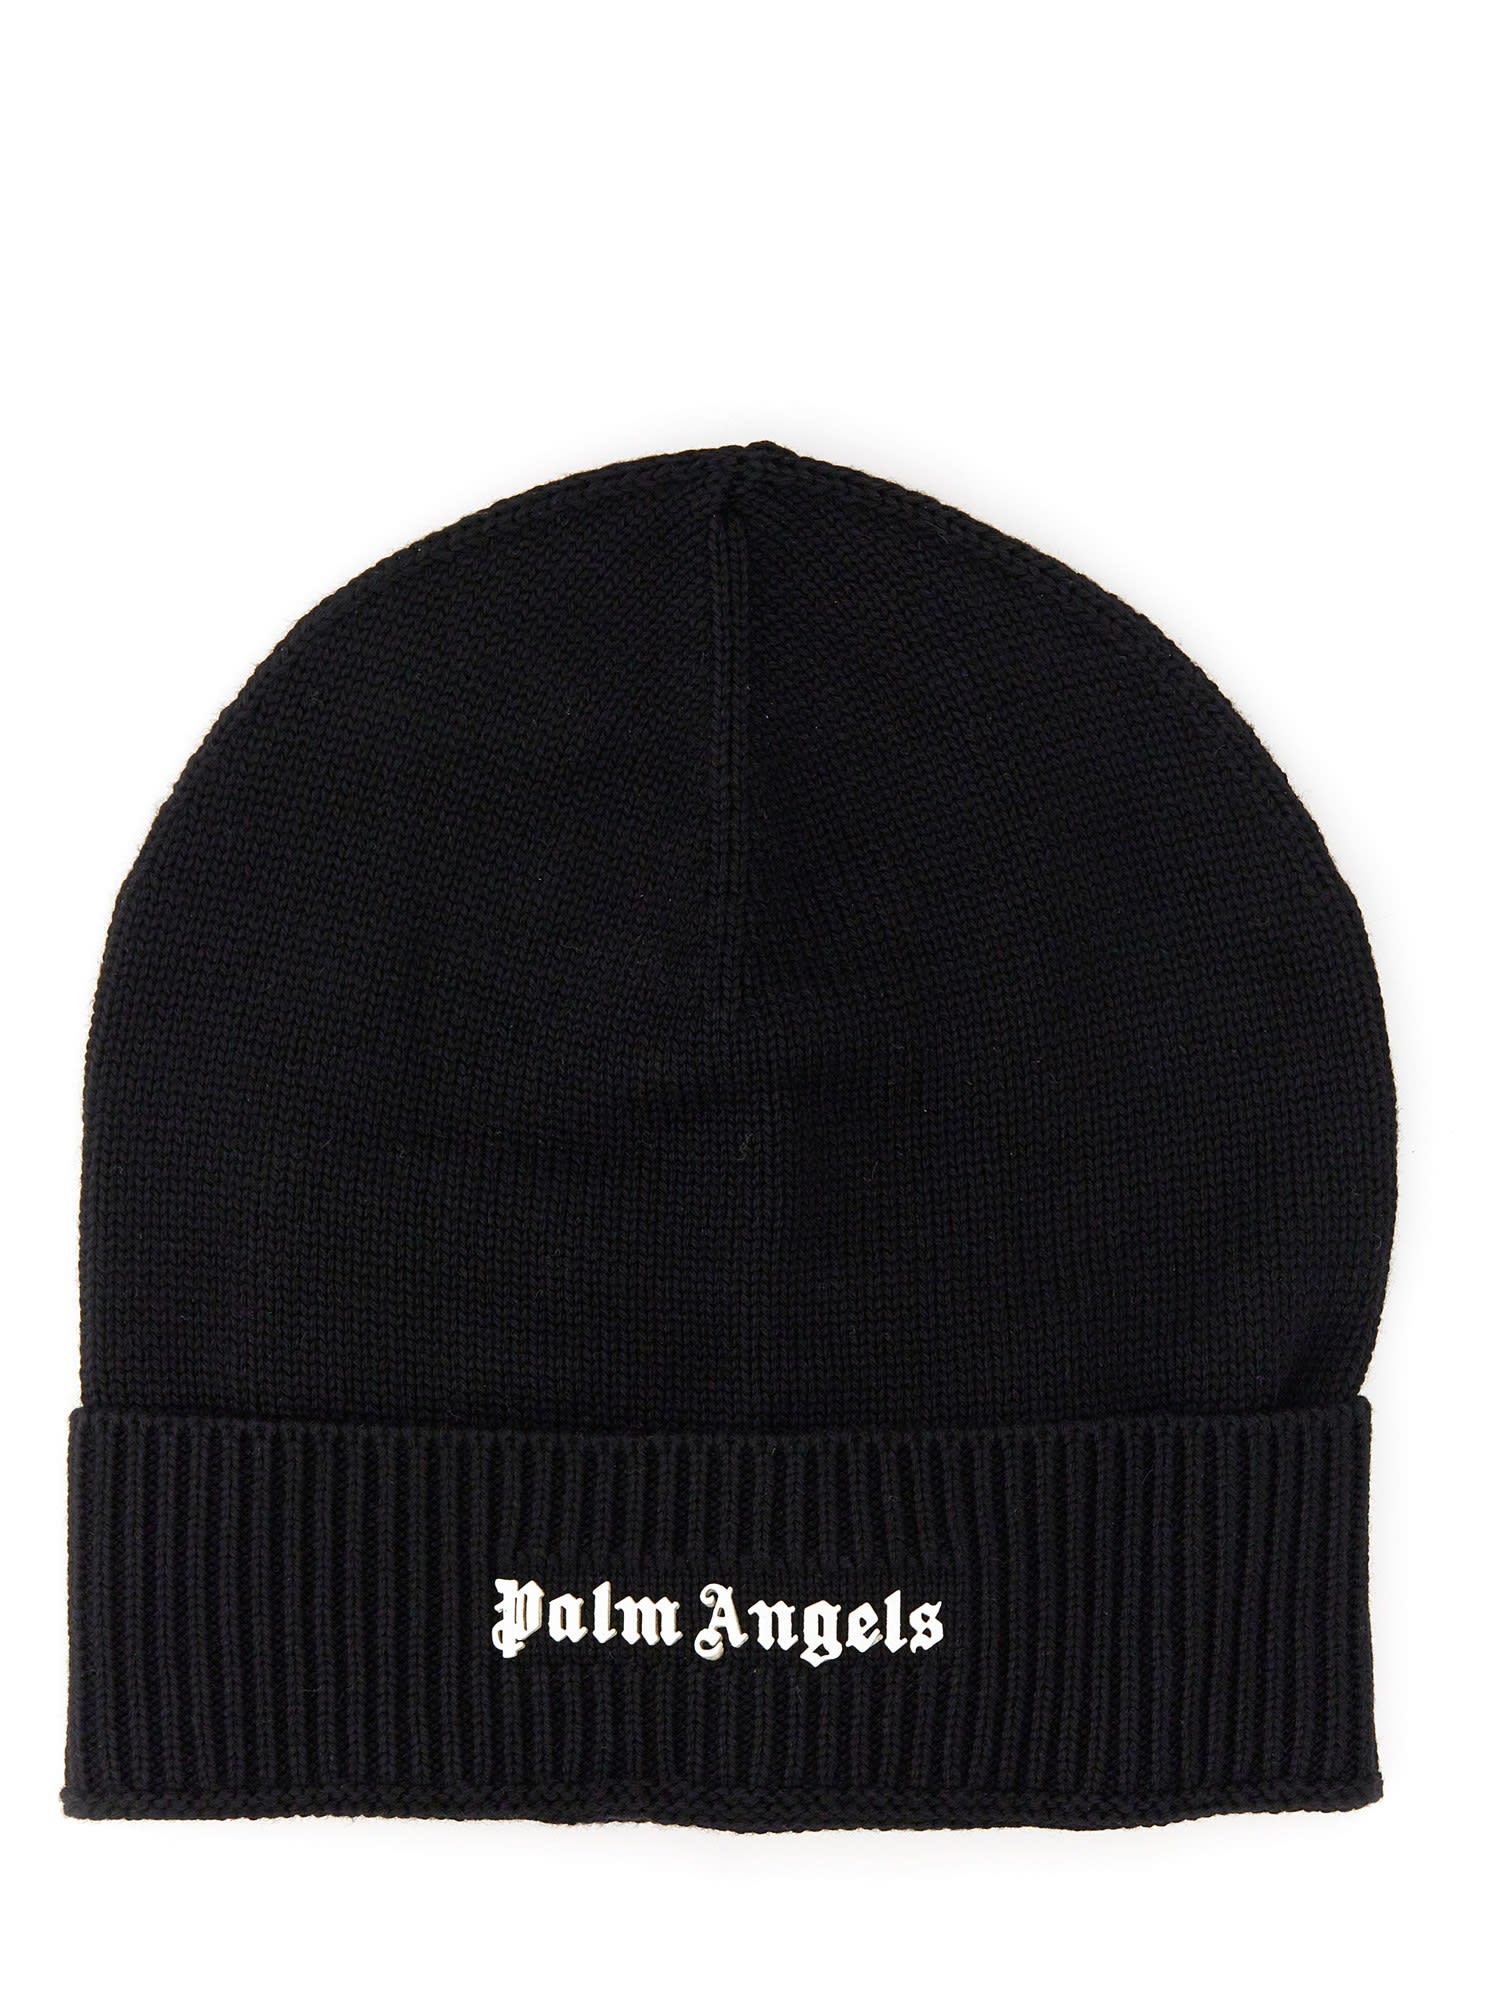 Palm Angels Knit Hat